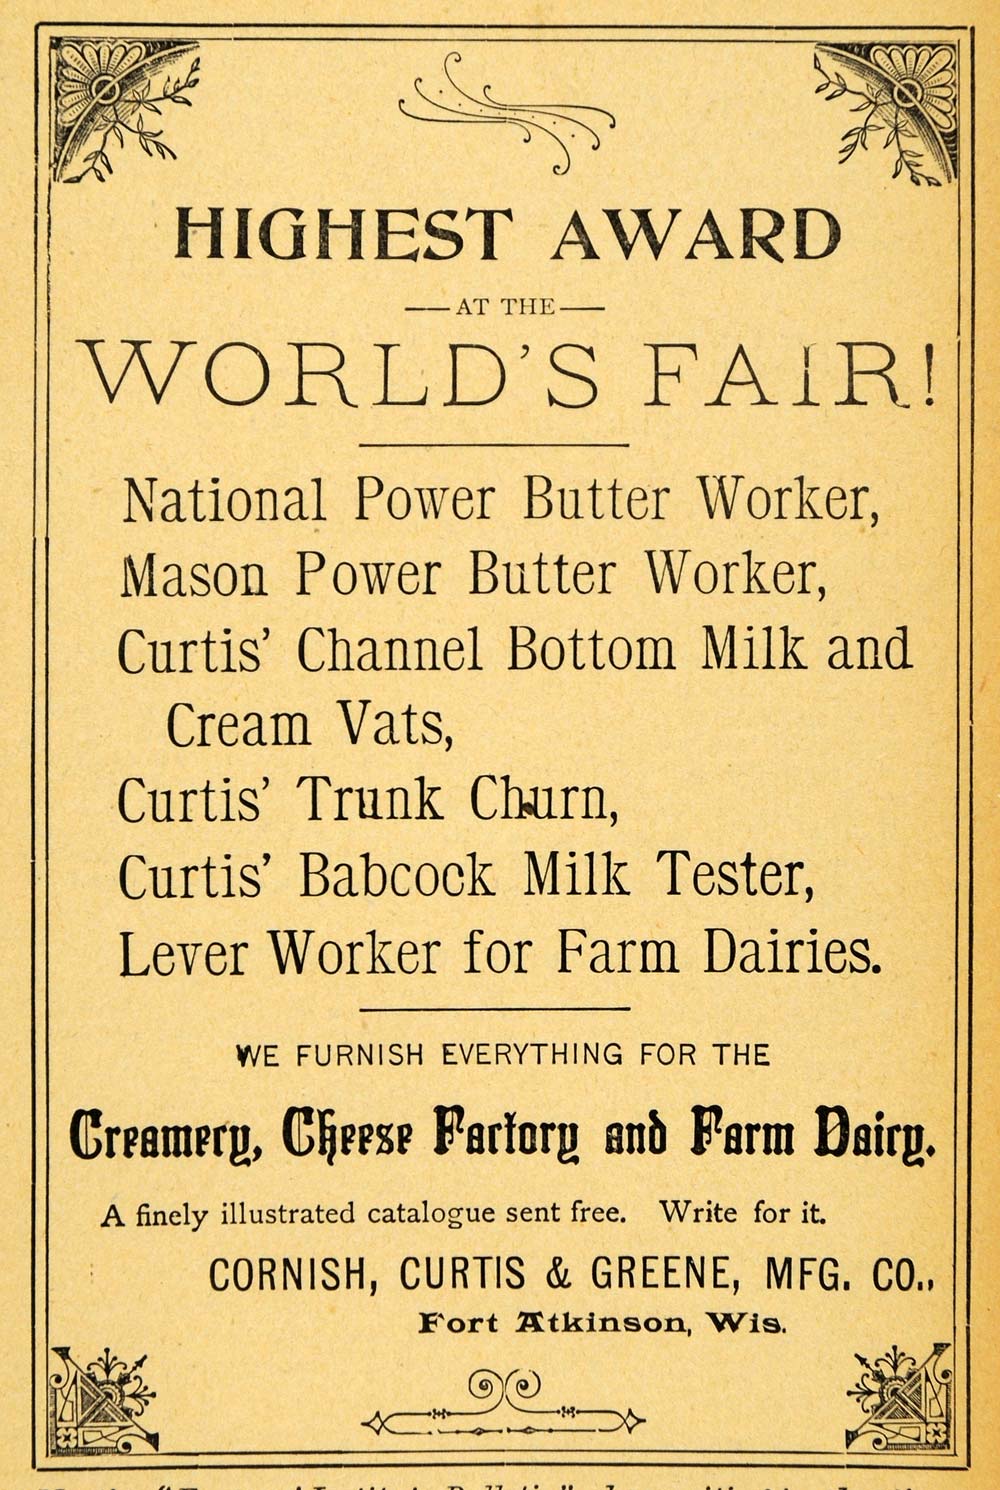 1893 Ad Cornish Curtis Greene Fort Atkinson WI Creamery - ORIGINAL WFI1